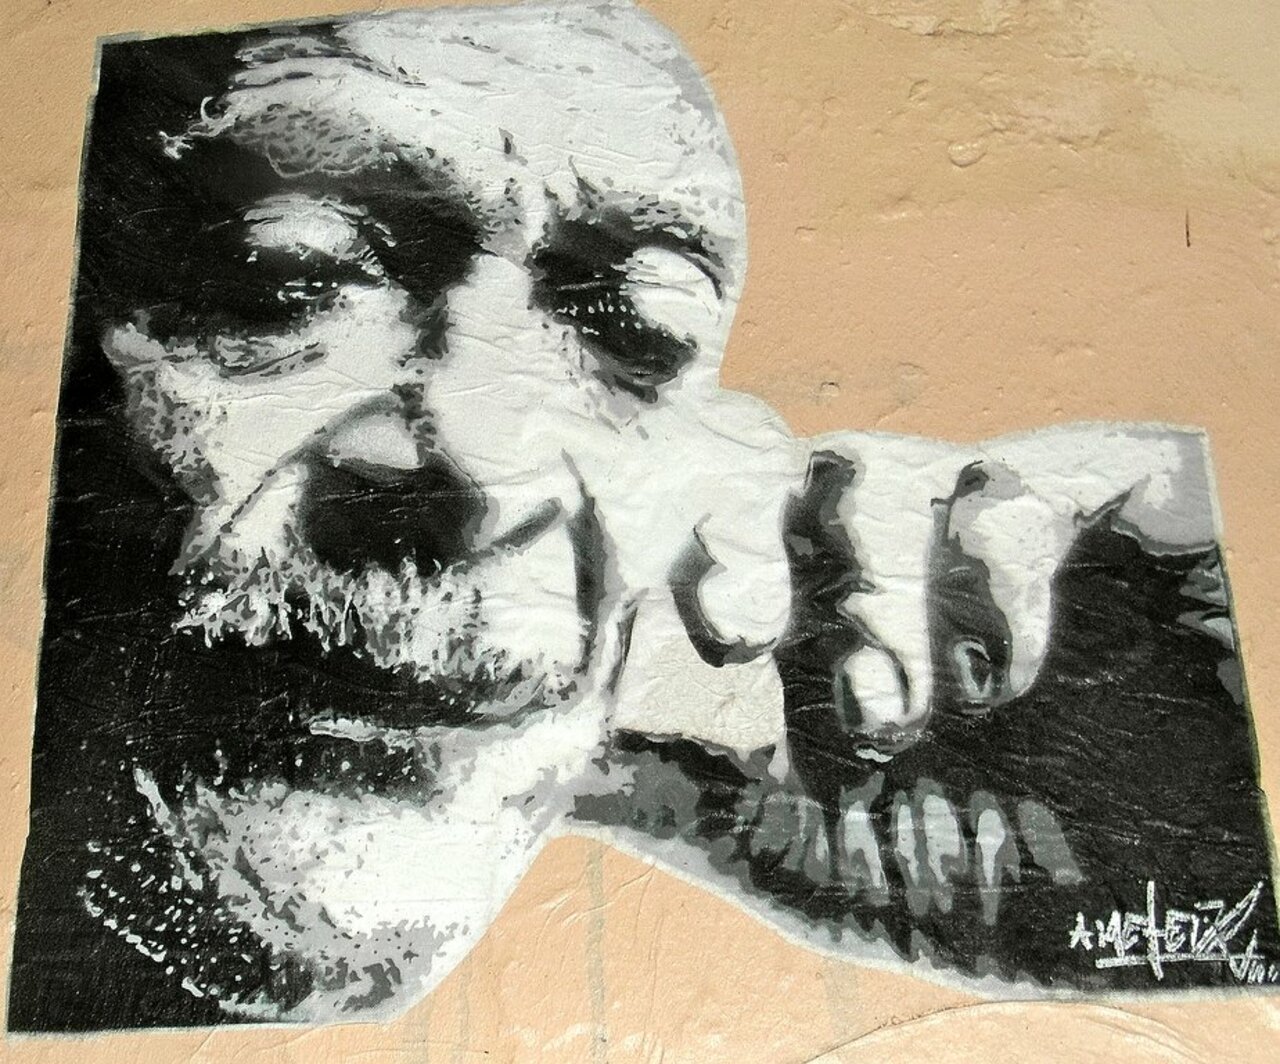 Street Art by anonymous in # http://www.urbacolors.com #art #mural #graffiti #streetart https://t.co/i4aNlAXpNq